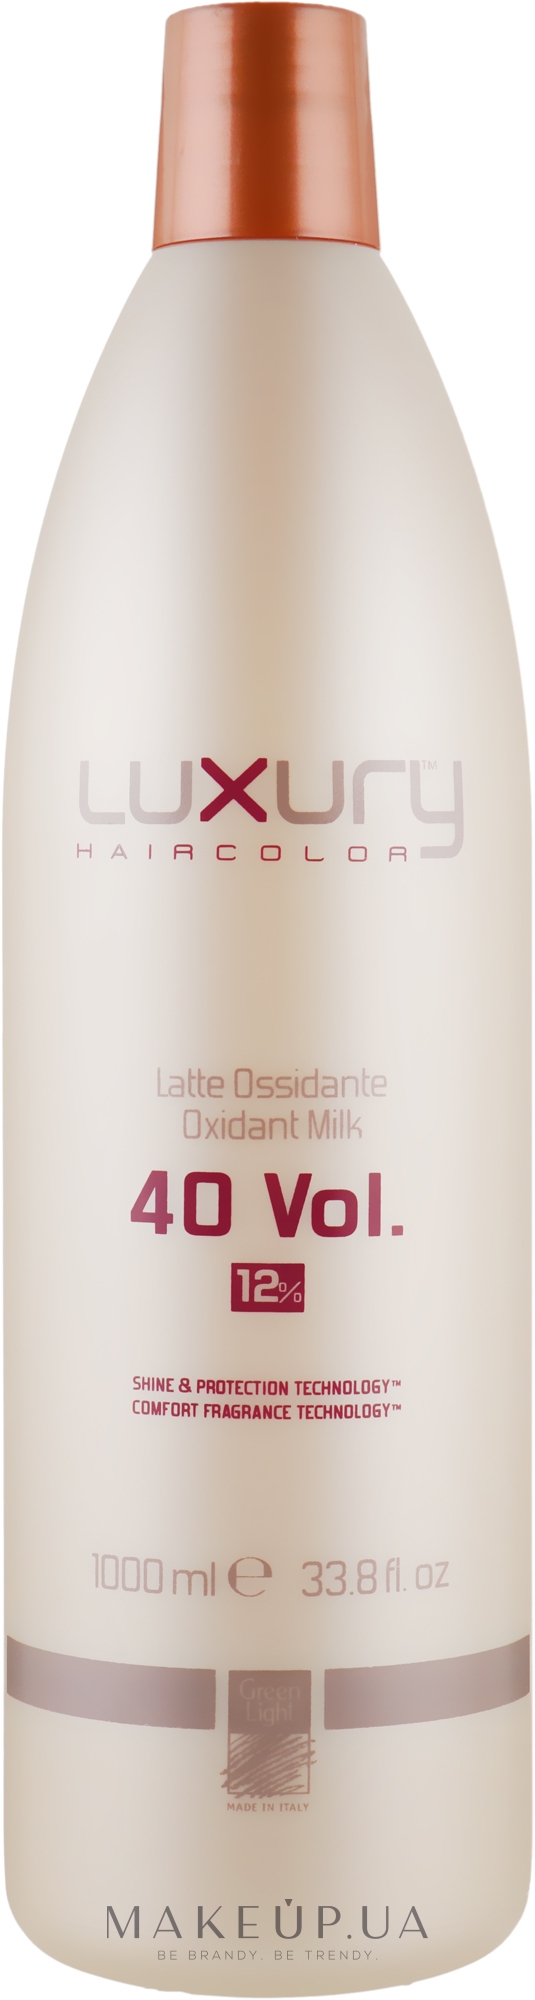 Молочный Оксидант - Green Light Luxury Haircolor Oxidant Milk 12% 40 vol. — фото 1000ml